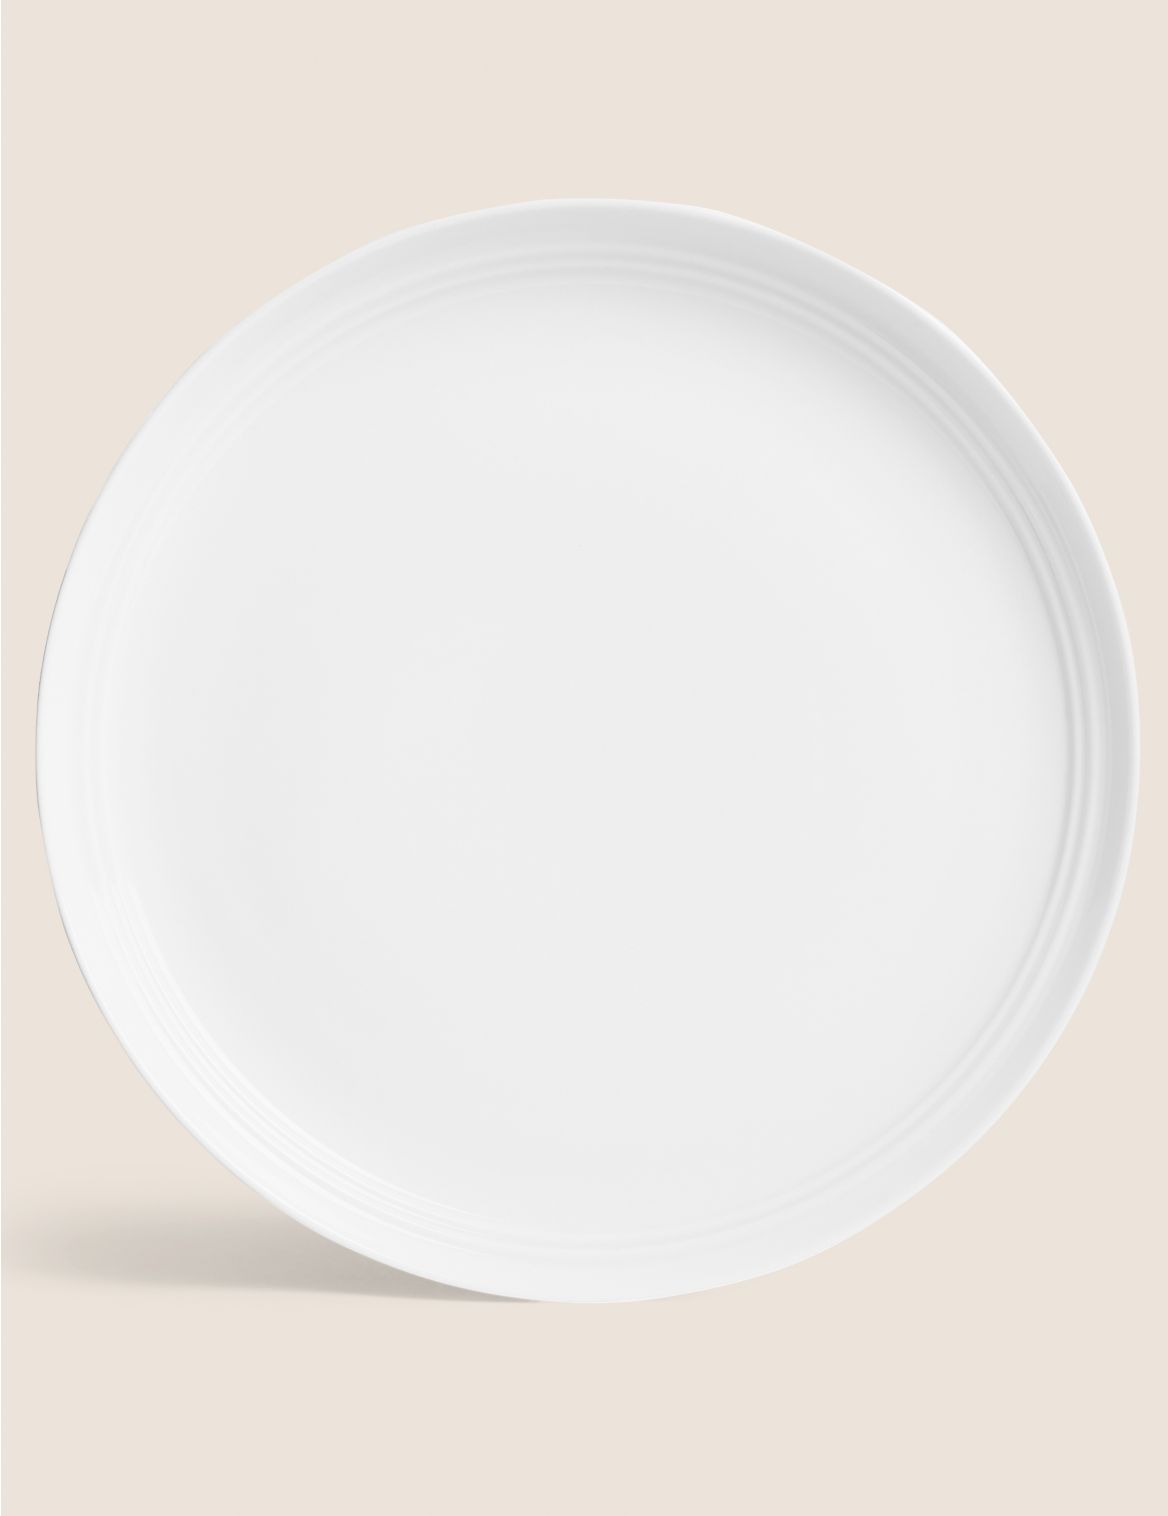 Marlowe Dinner Plate white